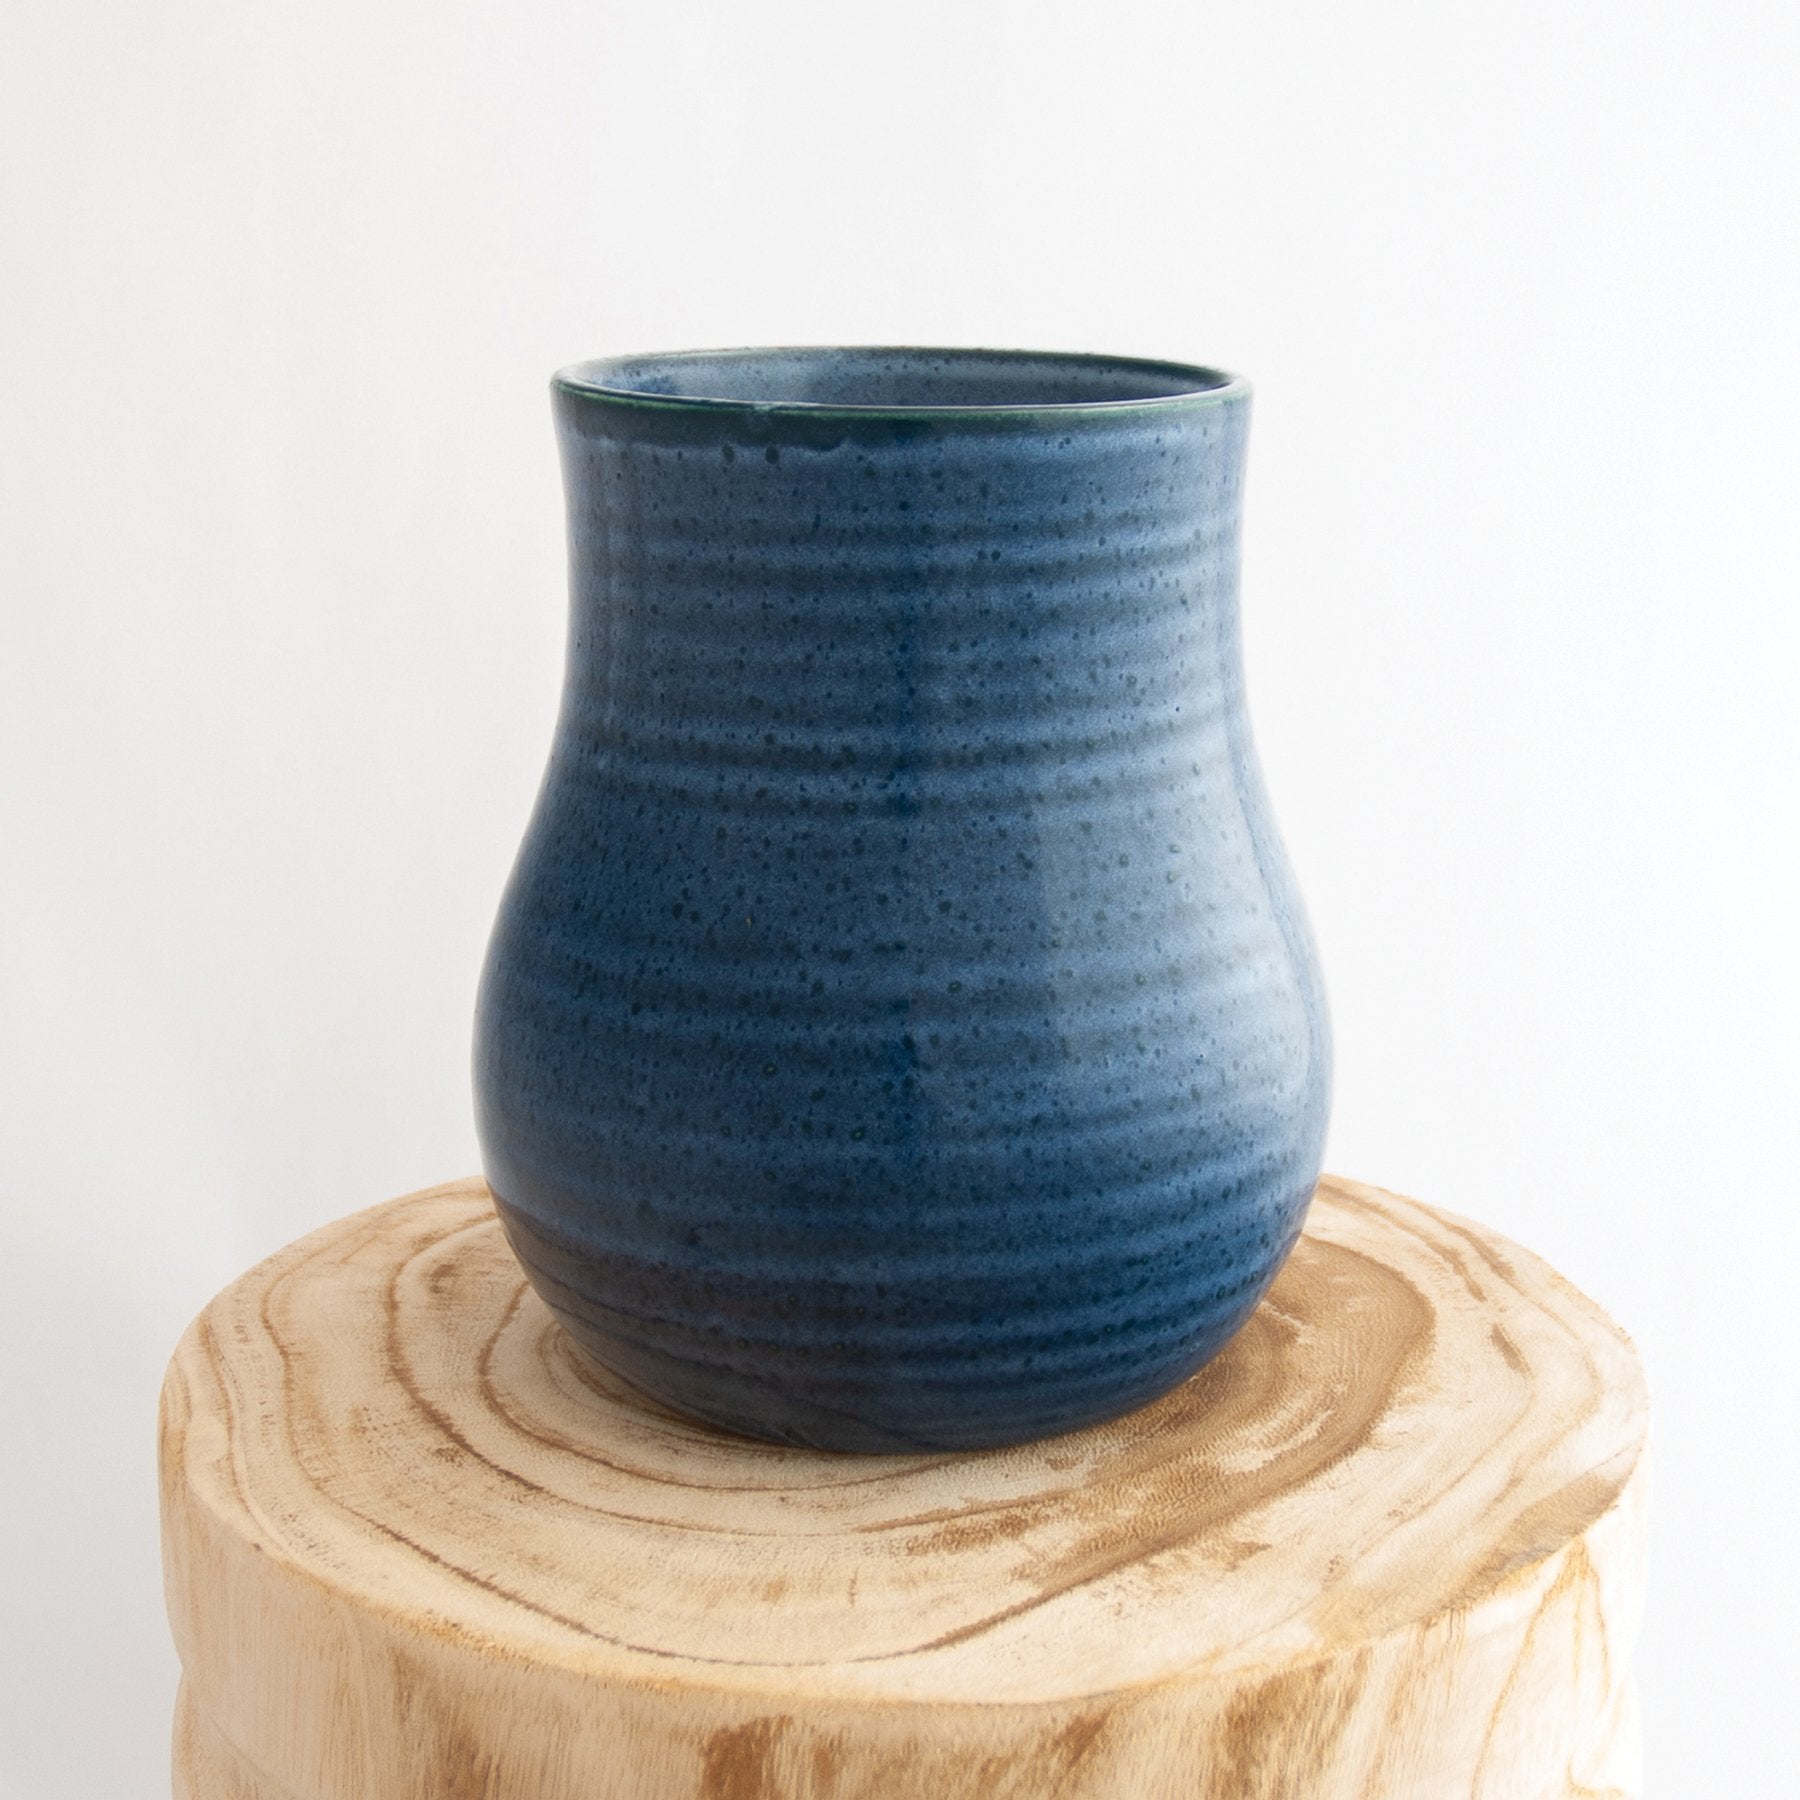 Robert Gordon pottery botanica dark topaz blue vase sitting on a natural wooden round side table